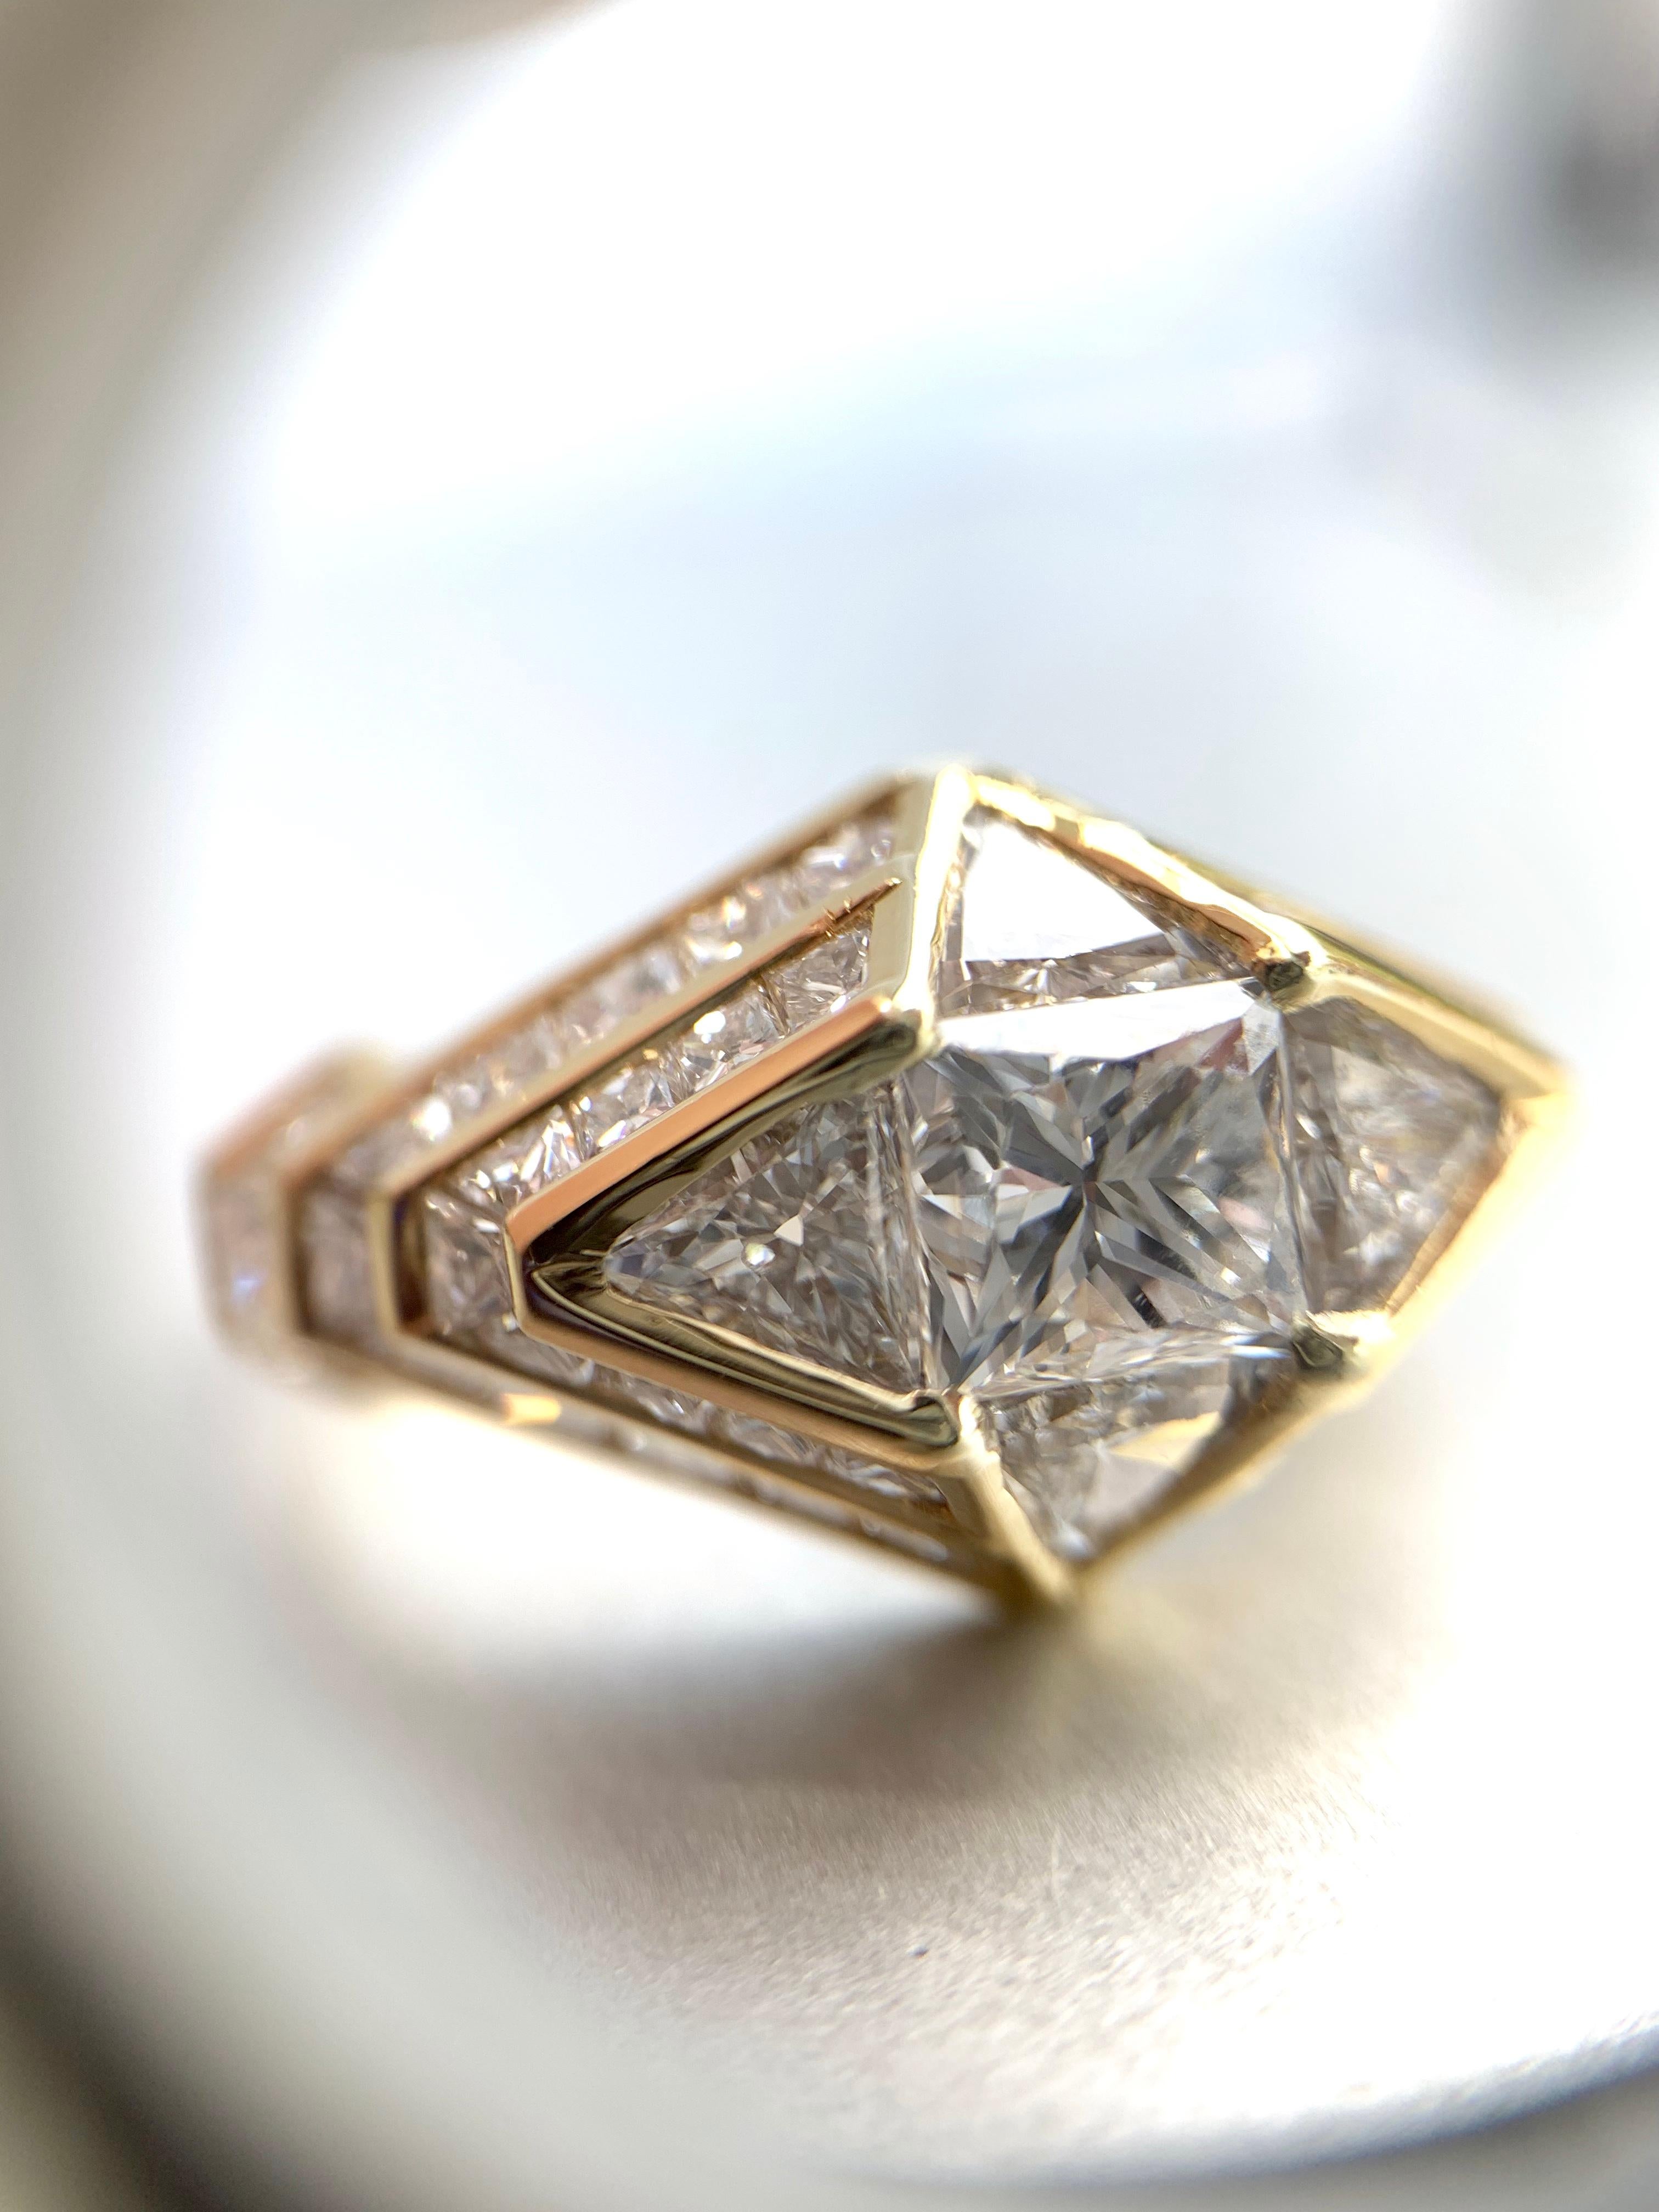 18 Karat Art Deco Inspired Diamond Ring 5.47 Carat Total Weight For Sale 9